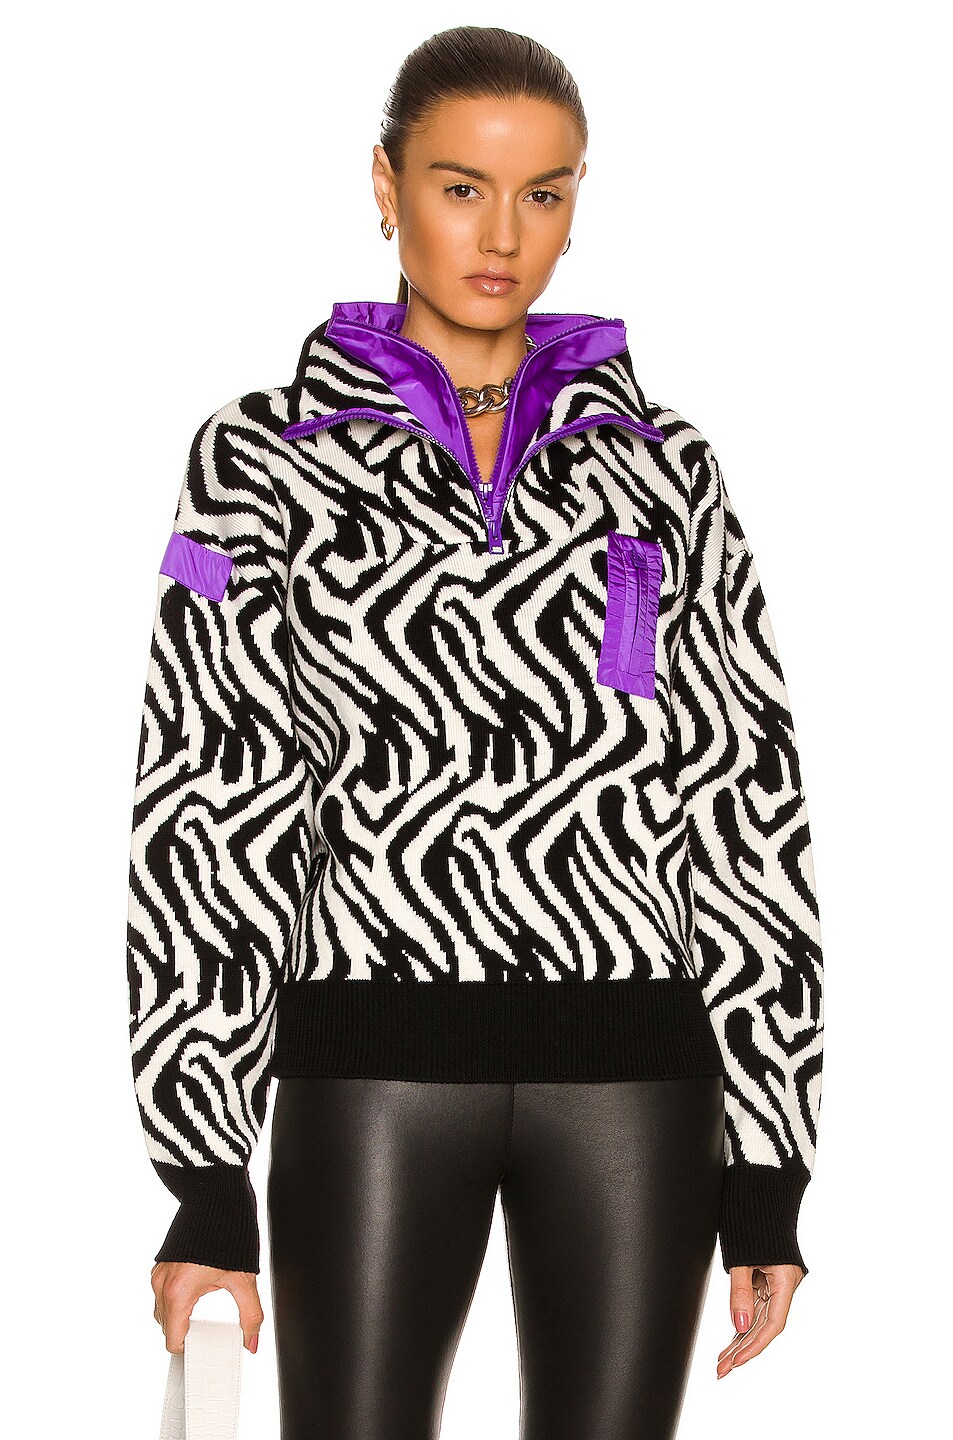 CORDOVA The Banff Sweater in Onyx, Cloud & Violet Flash | FWRD